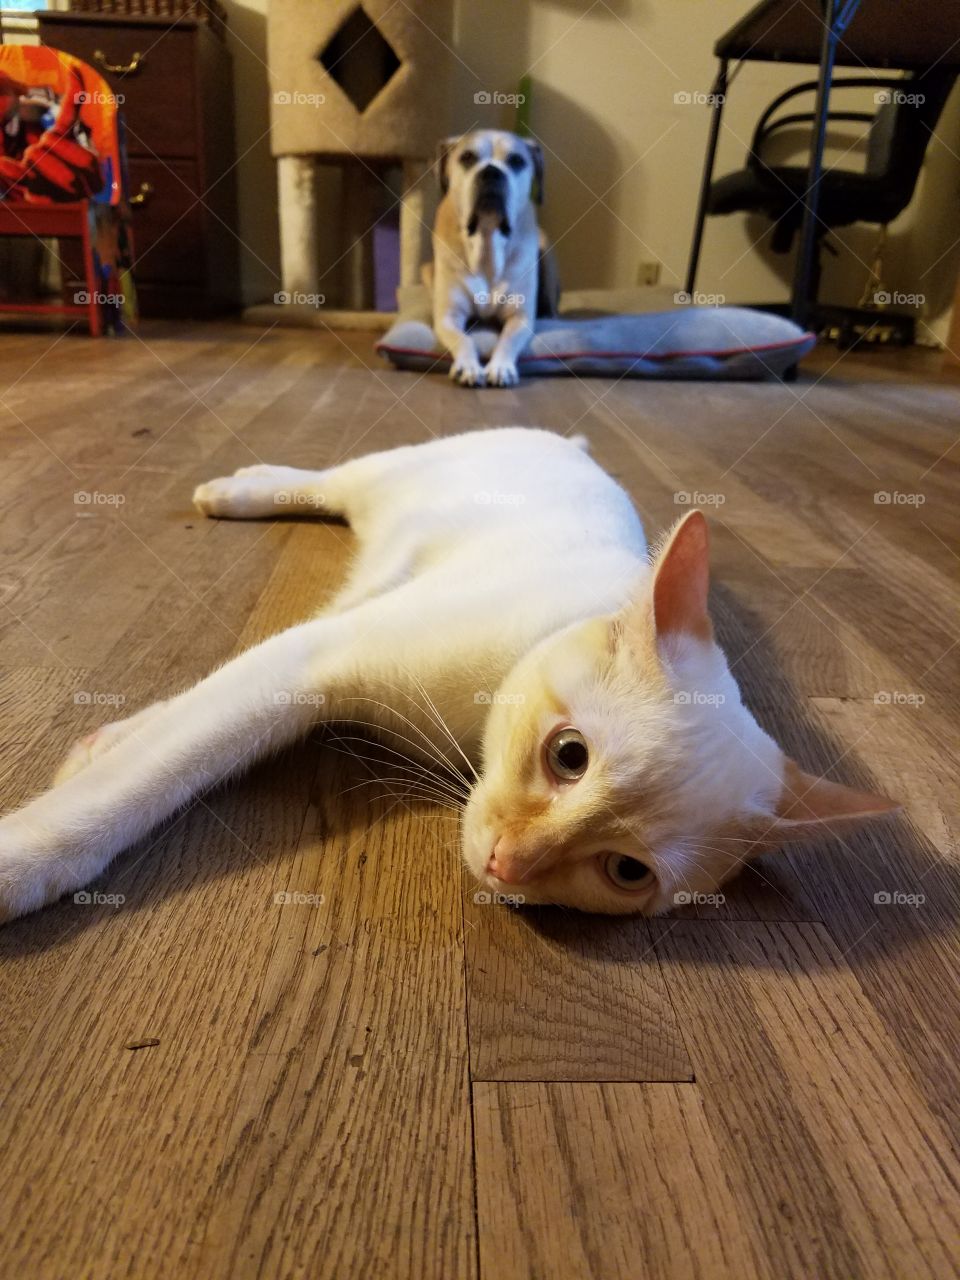 Duke  laying on floor